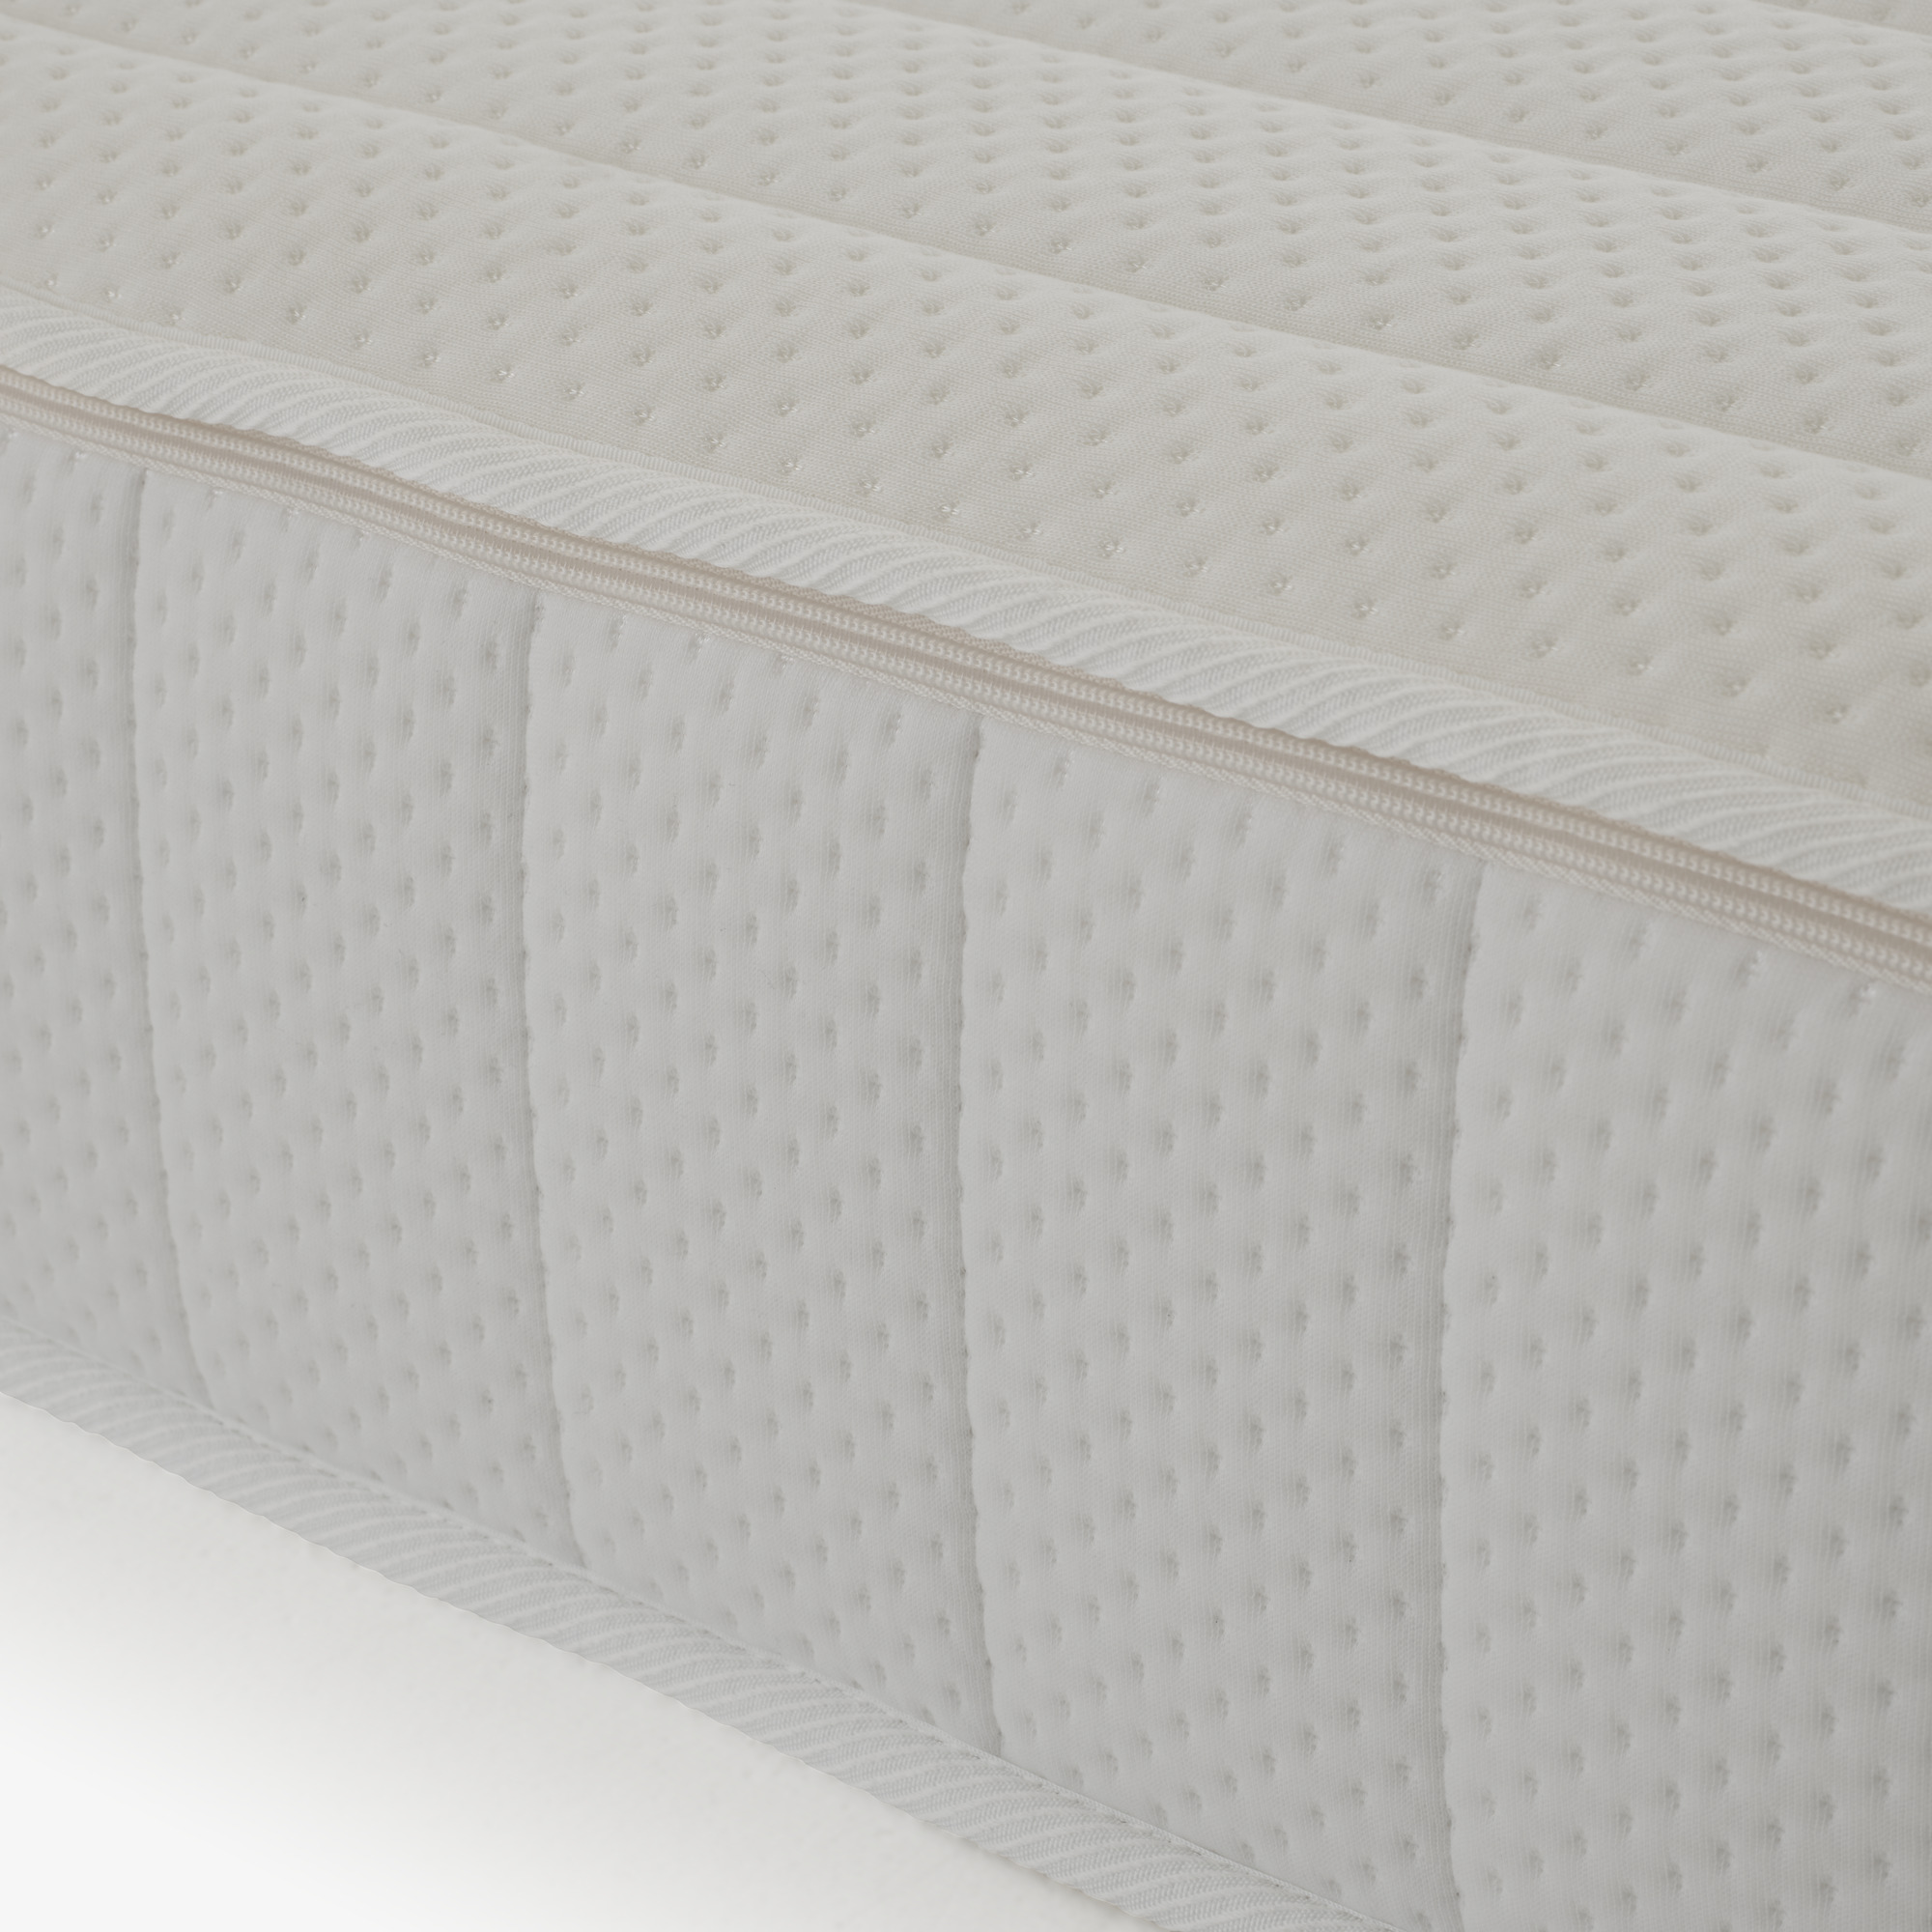 Image Bultex + viscoelastic foam (sensus) mattresses 4